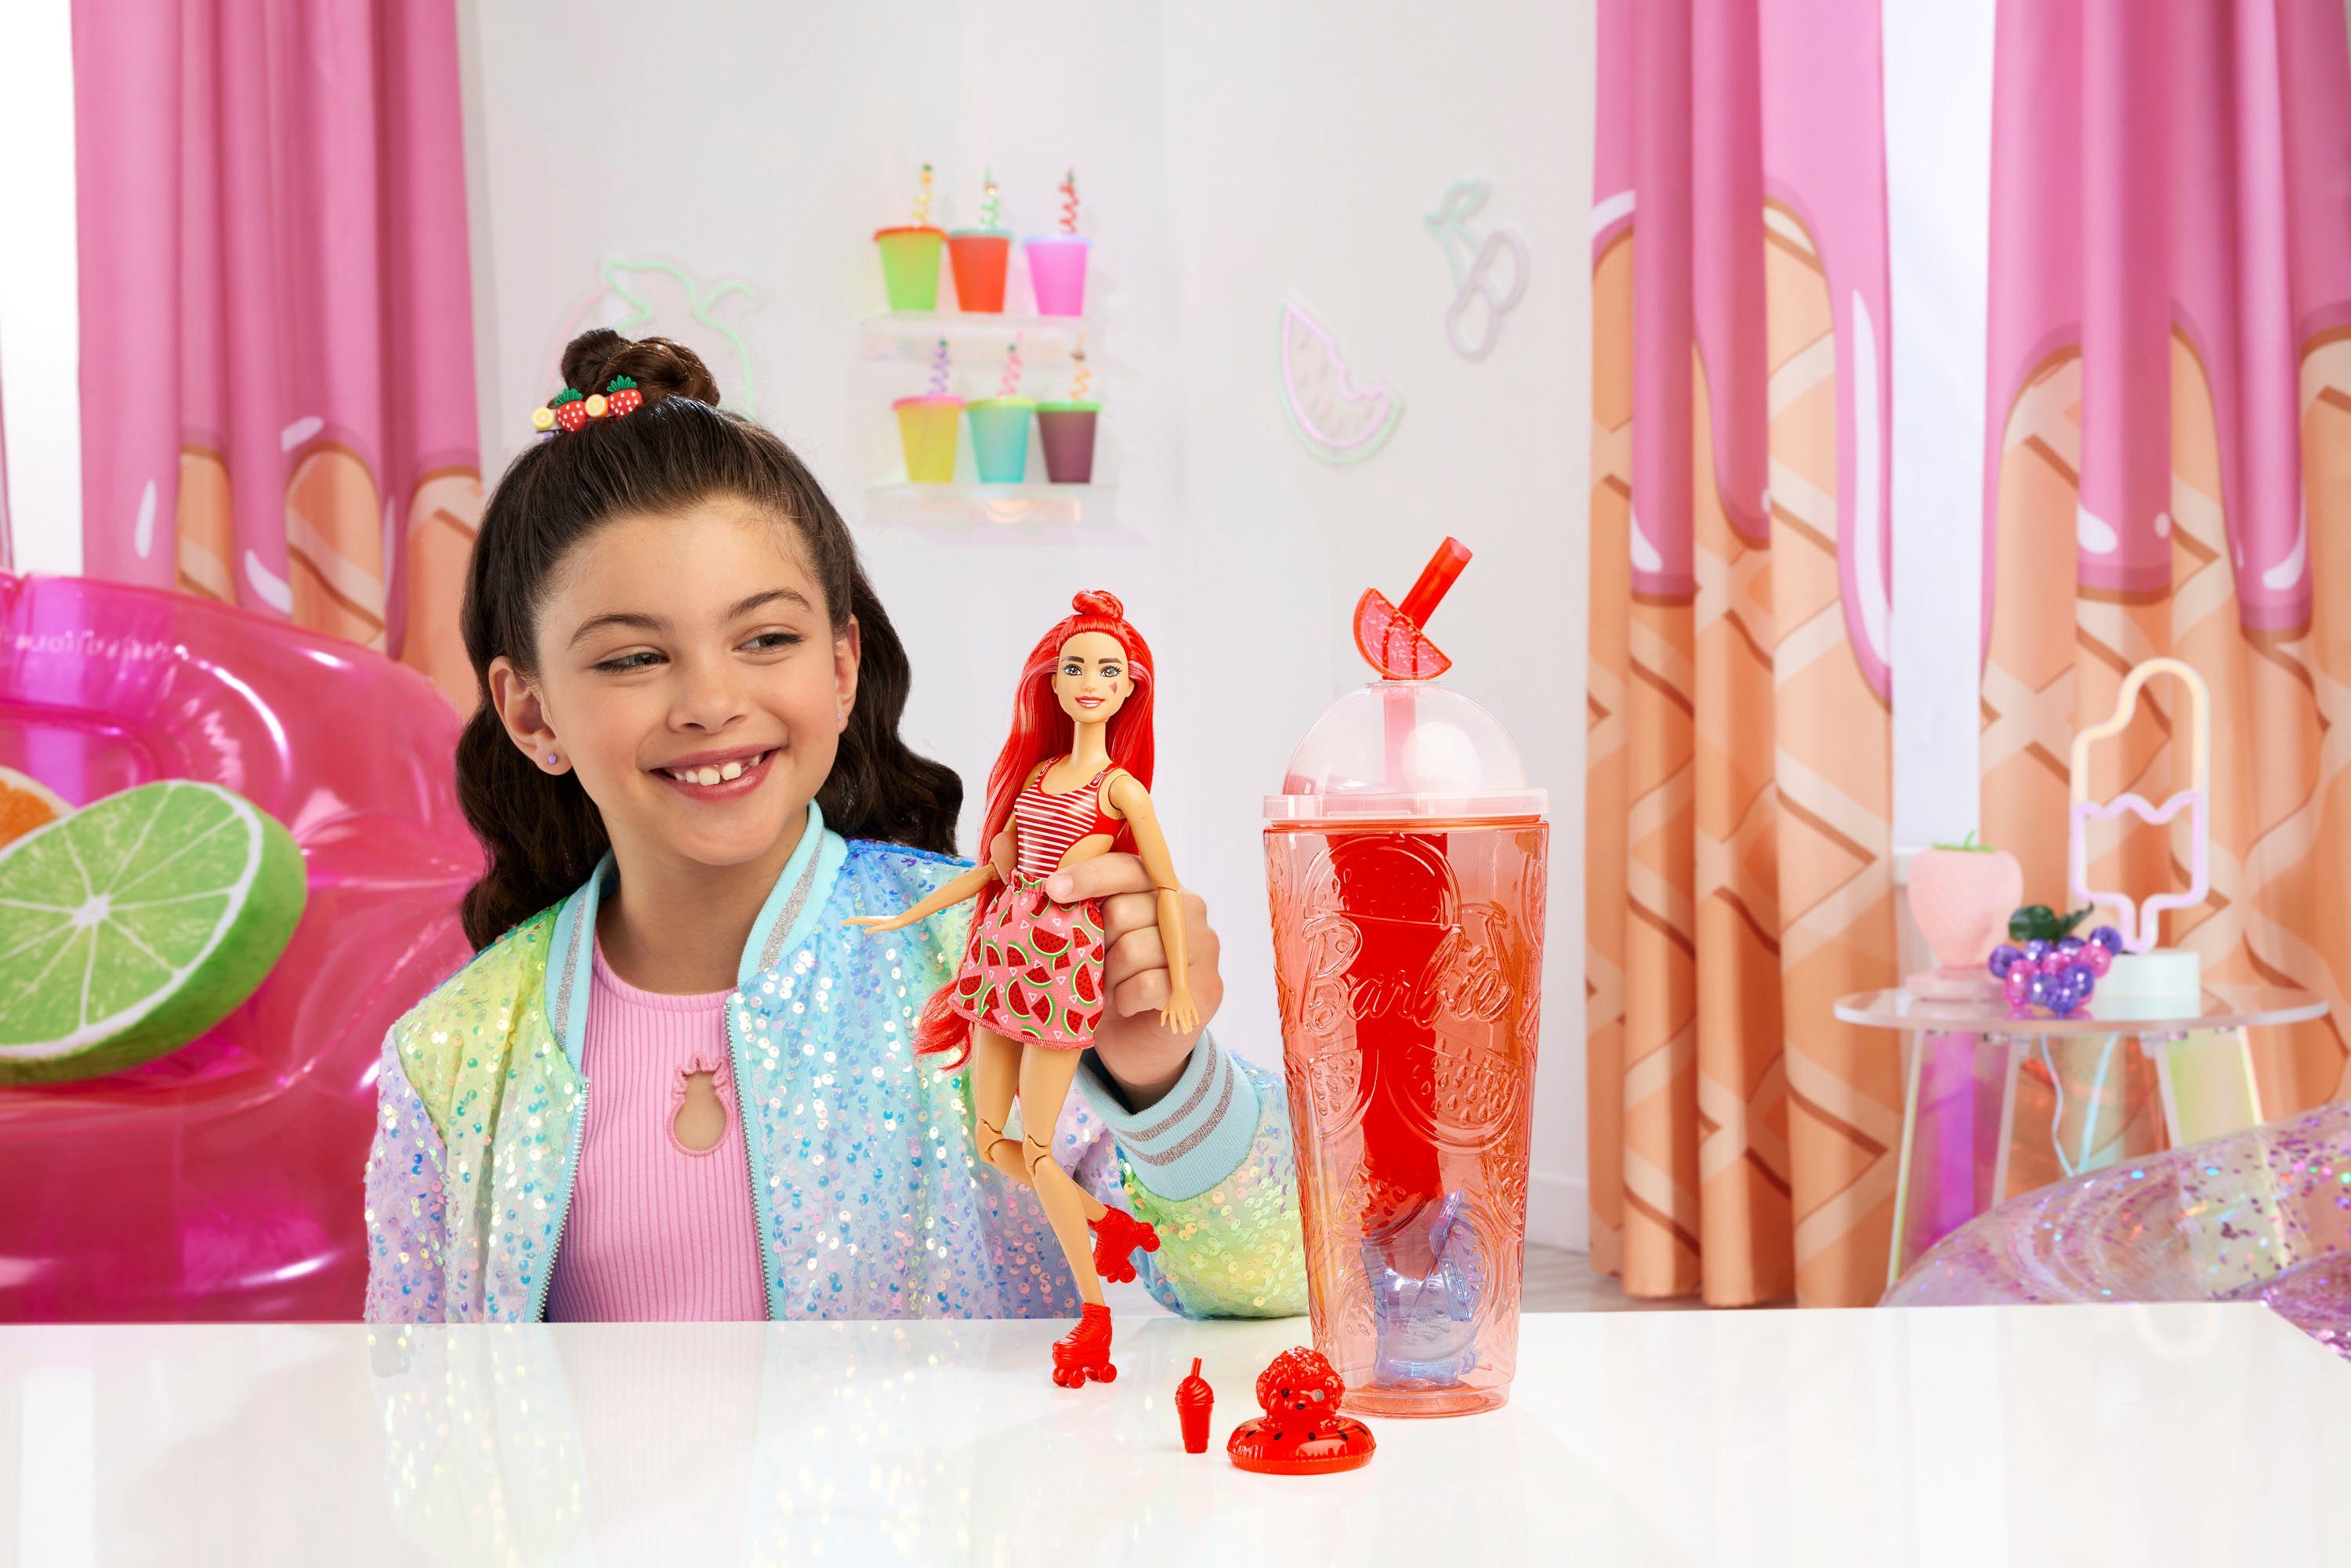 Barbie Pop! Farbwechsel Anziehpuppe mit Wassermelonendesign, Reveal, Fruit,